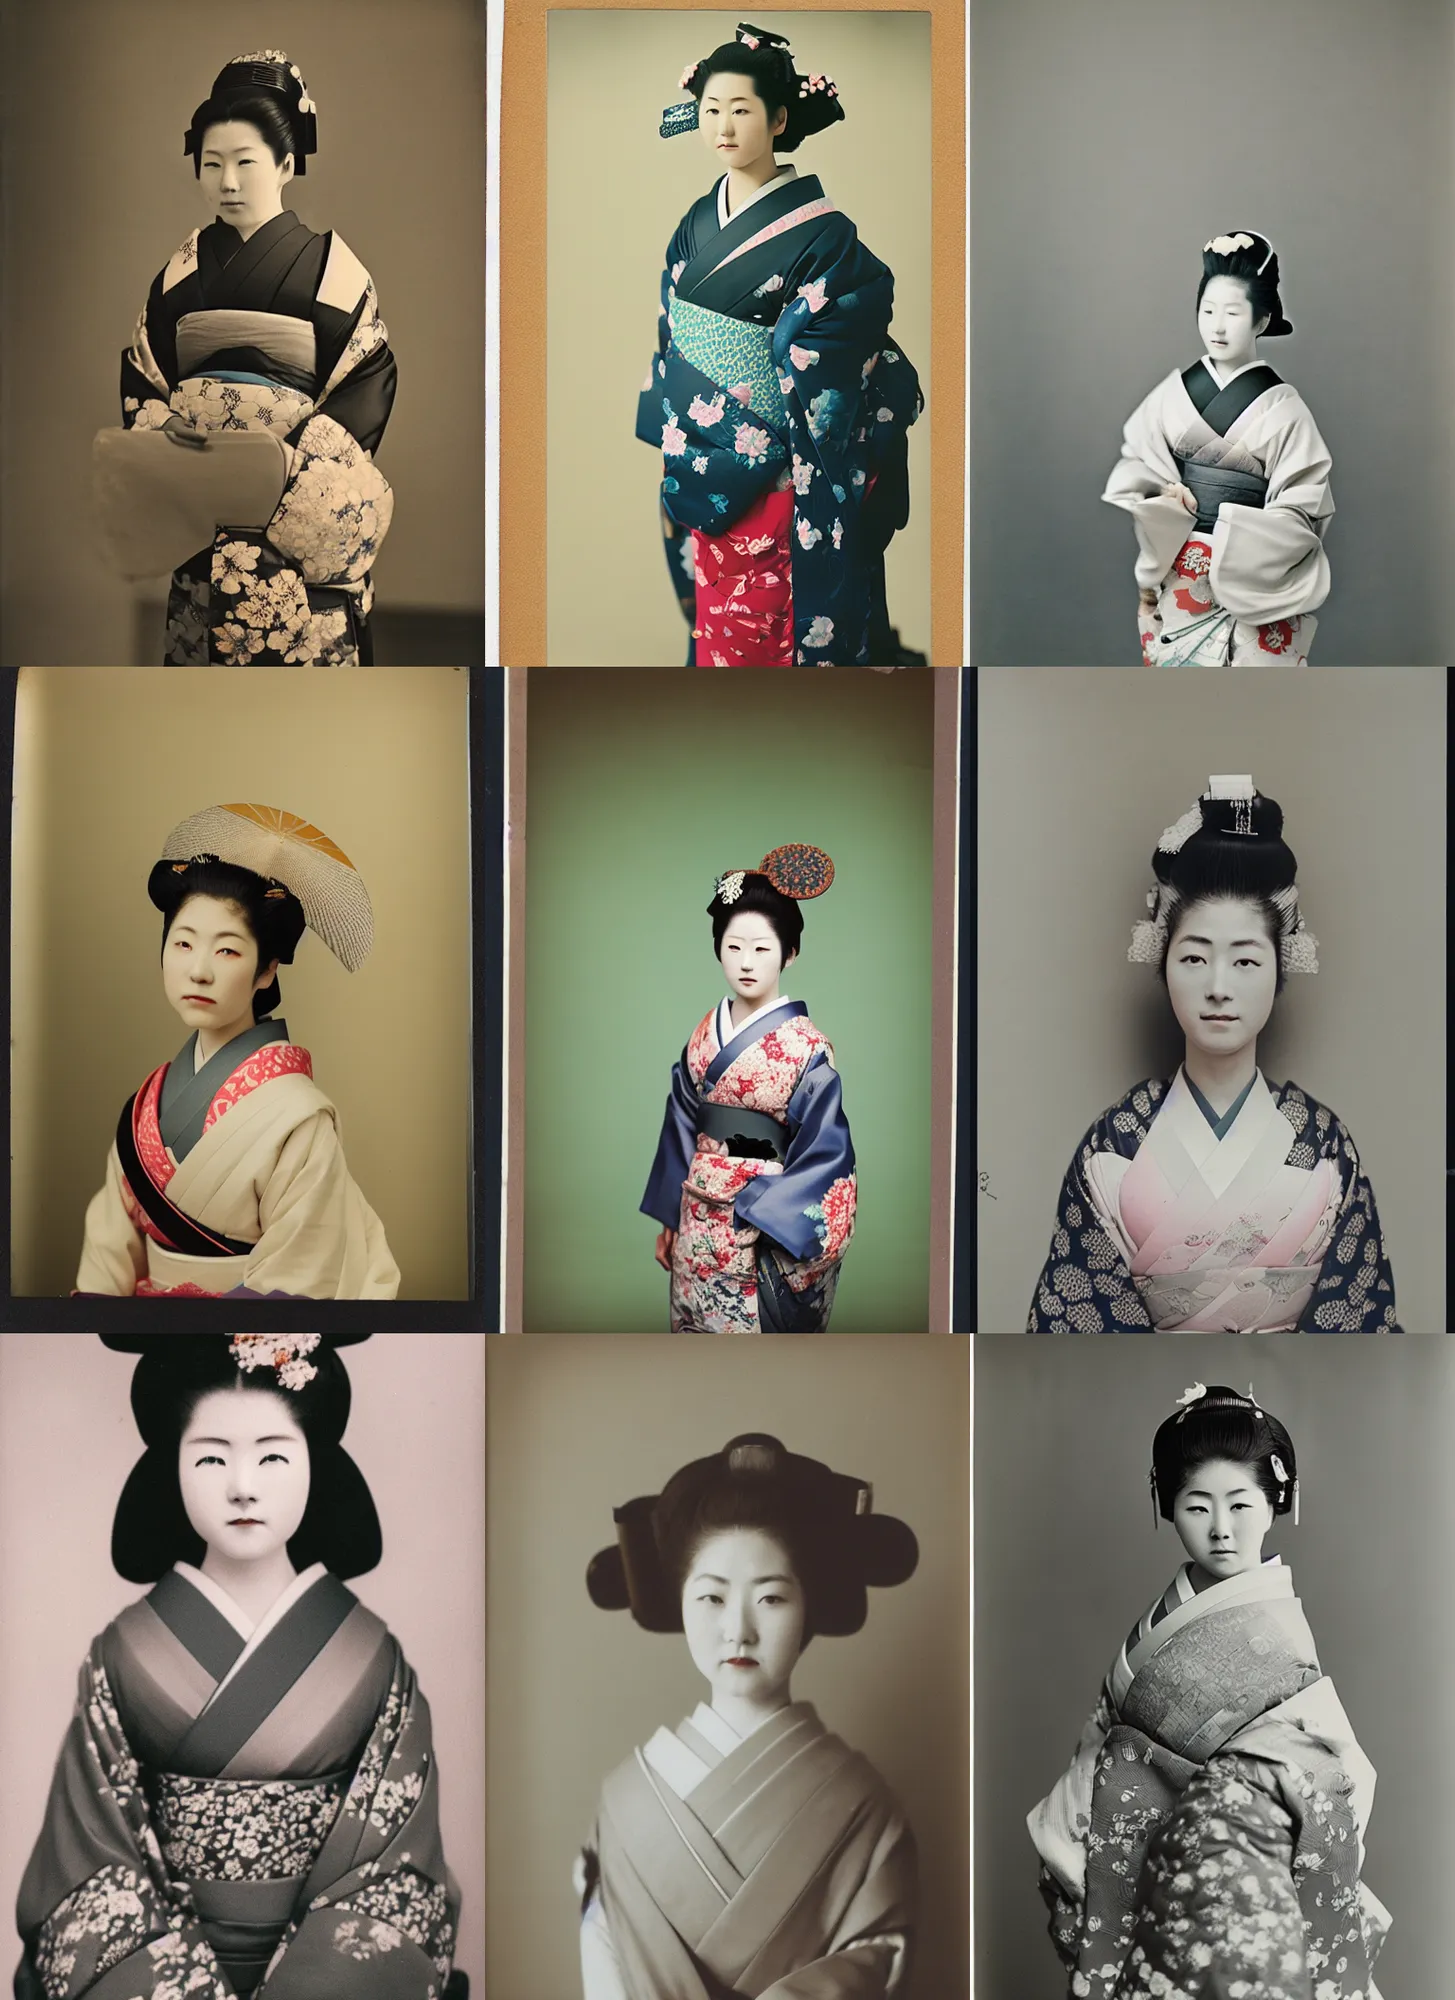 Prompt: Portrait Photograph of a Japanese Geisha FujiChrome Fortia 50